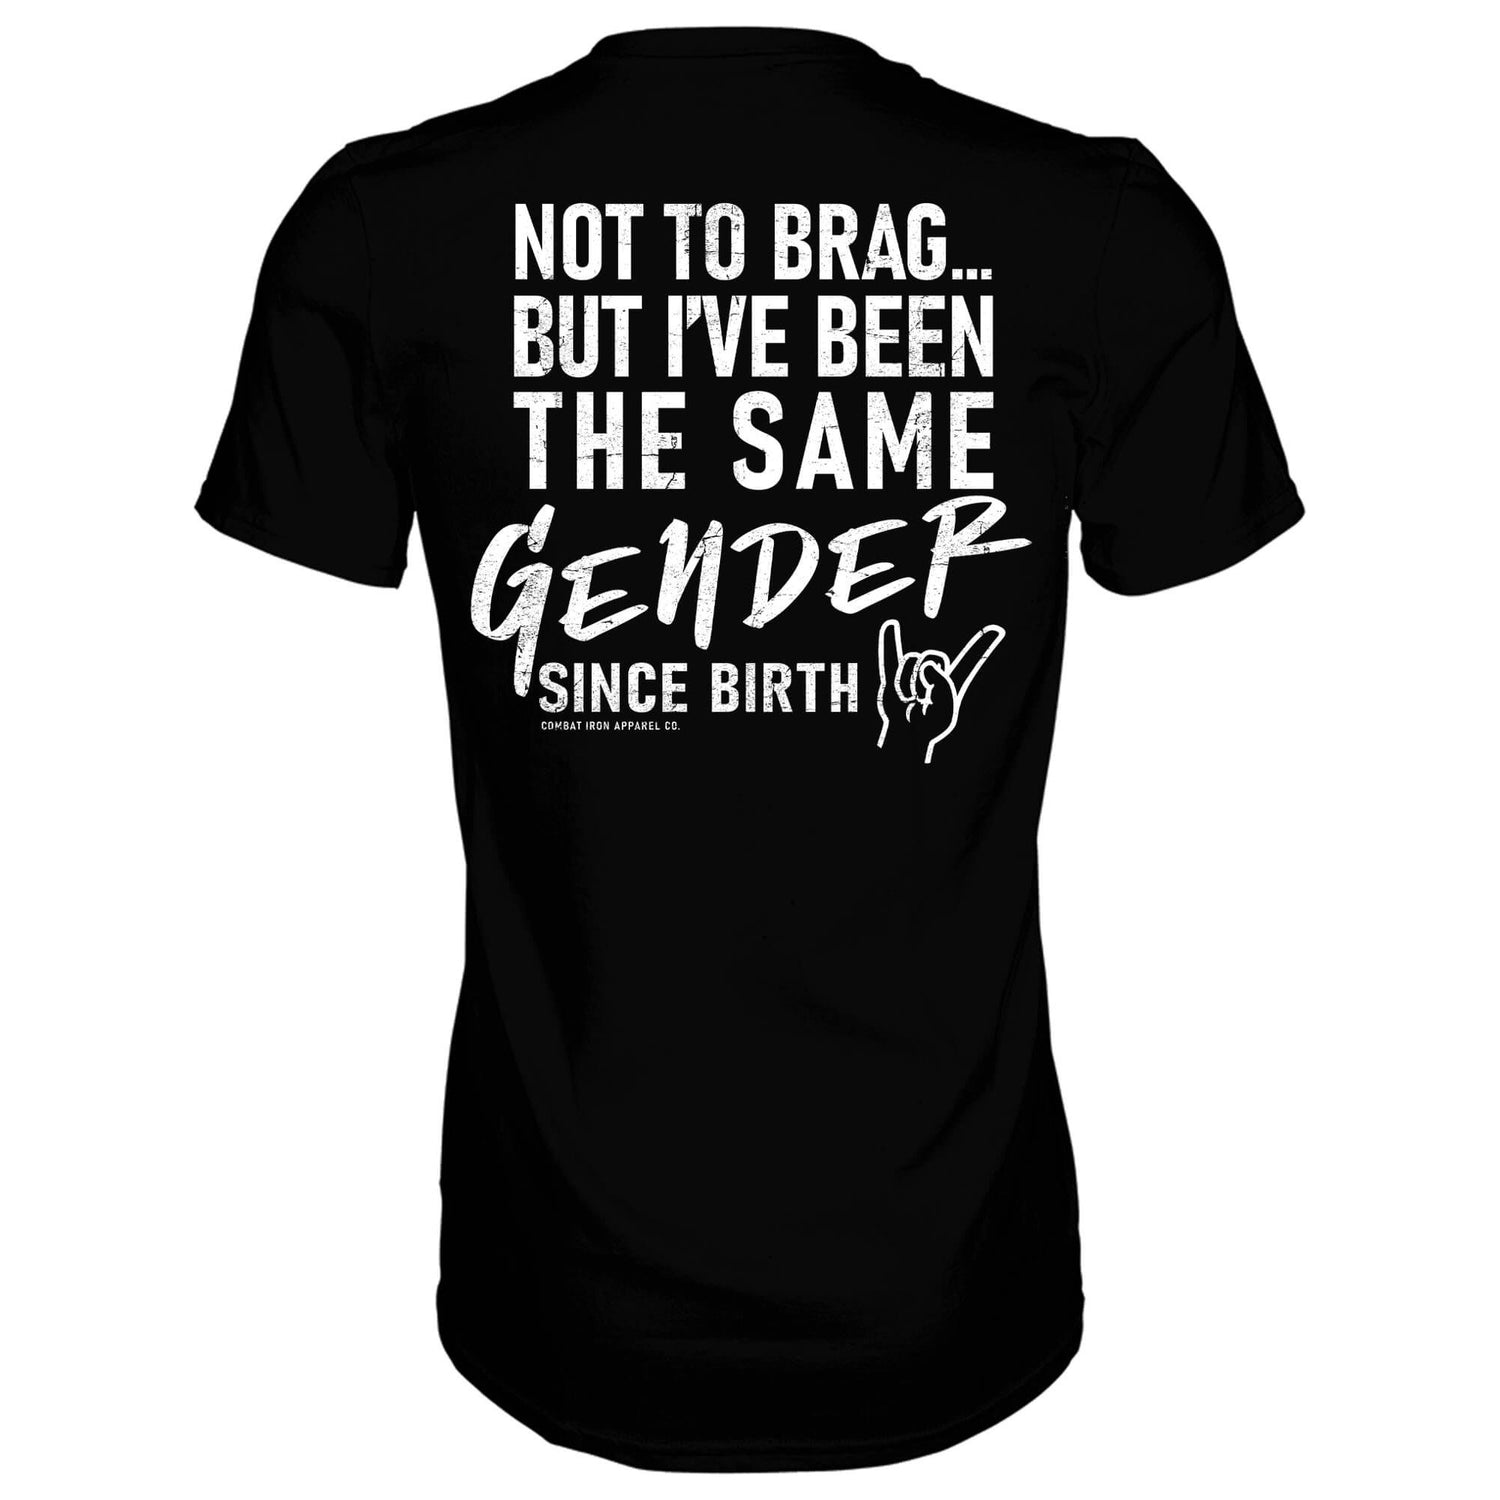 Same Gender Since Birth Men's T-Shirt